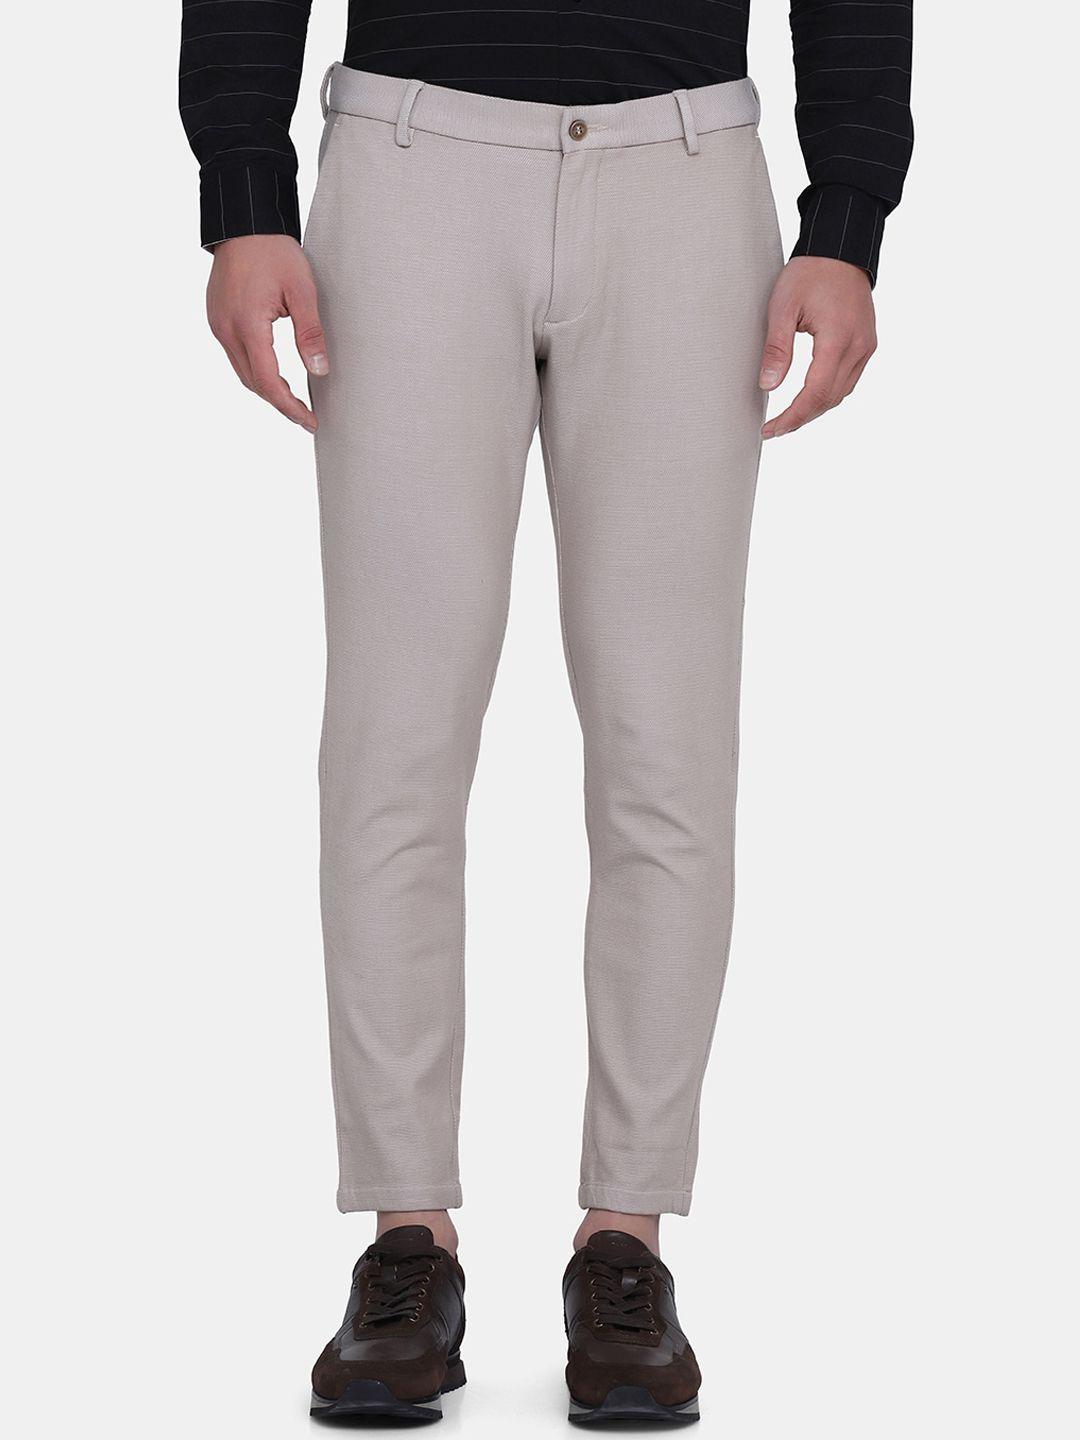 blackberrys-men-off-white-skinny-fit-cotton-trousers